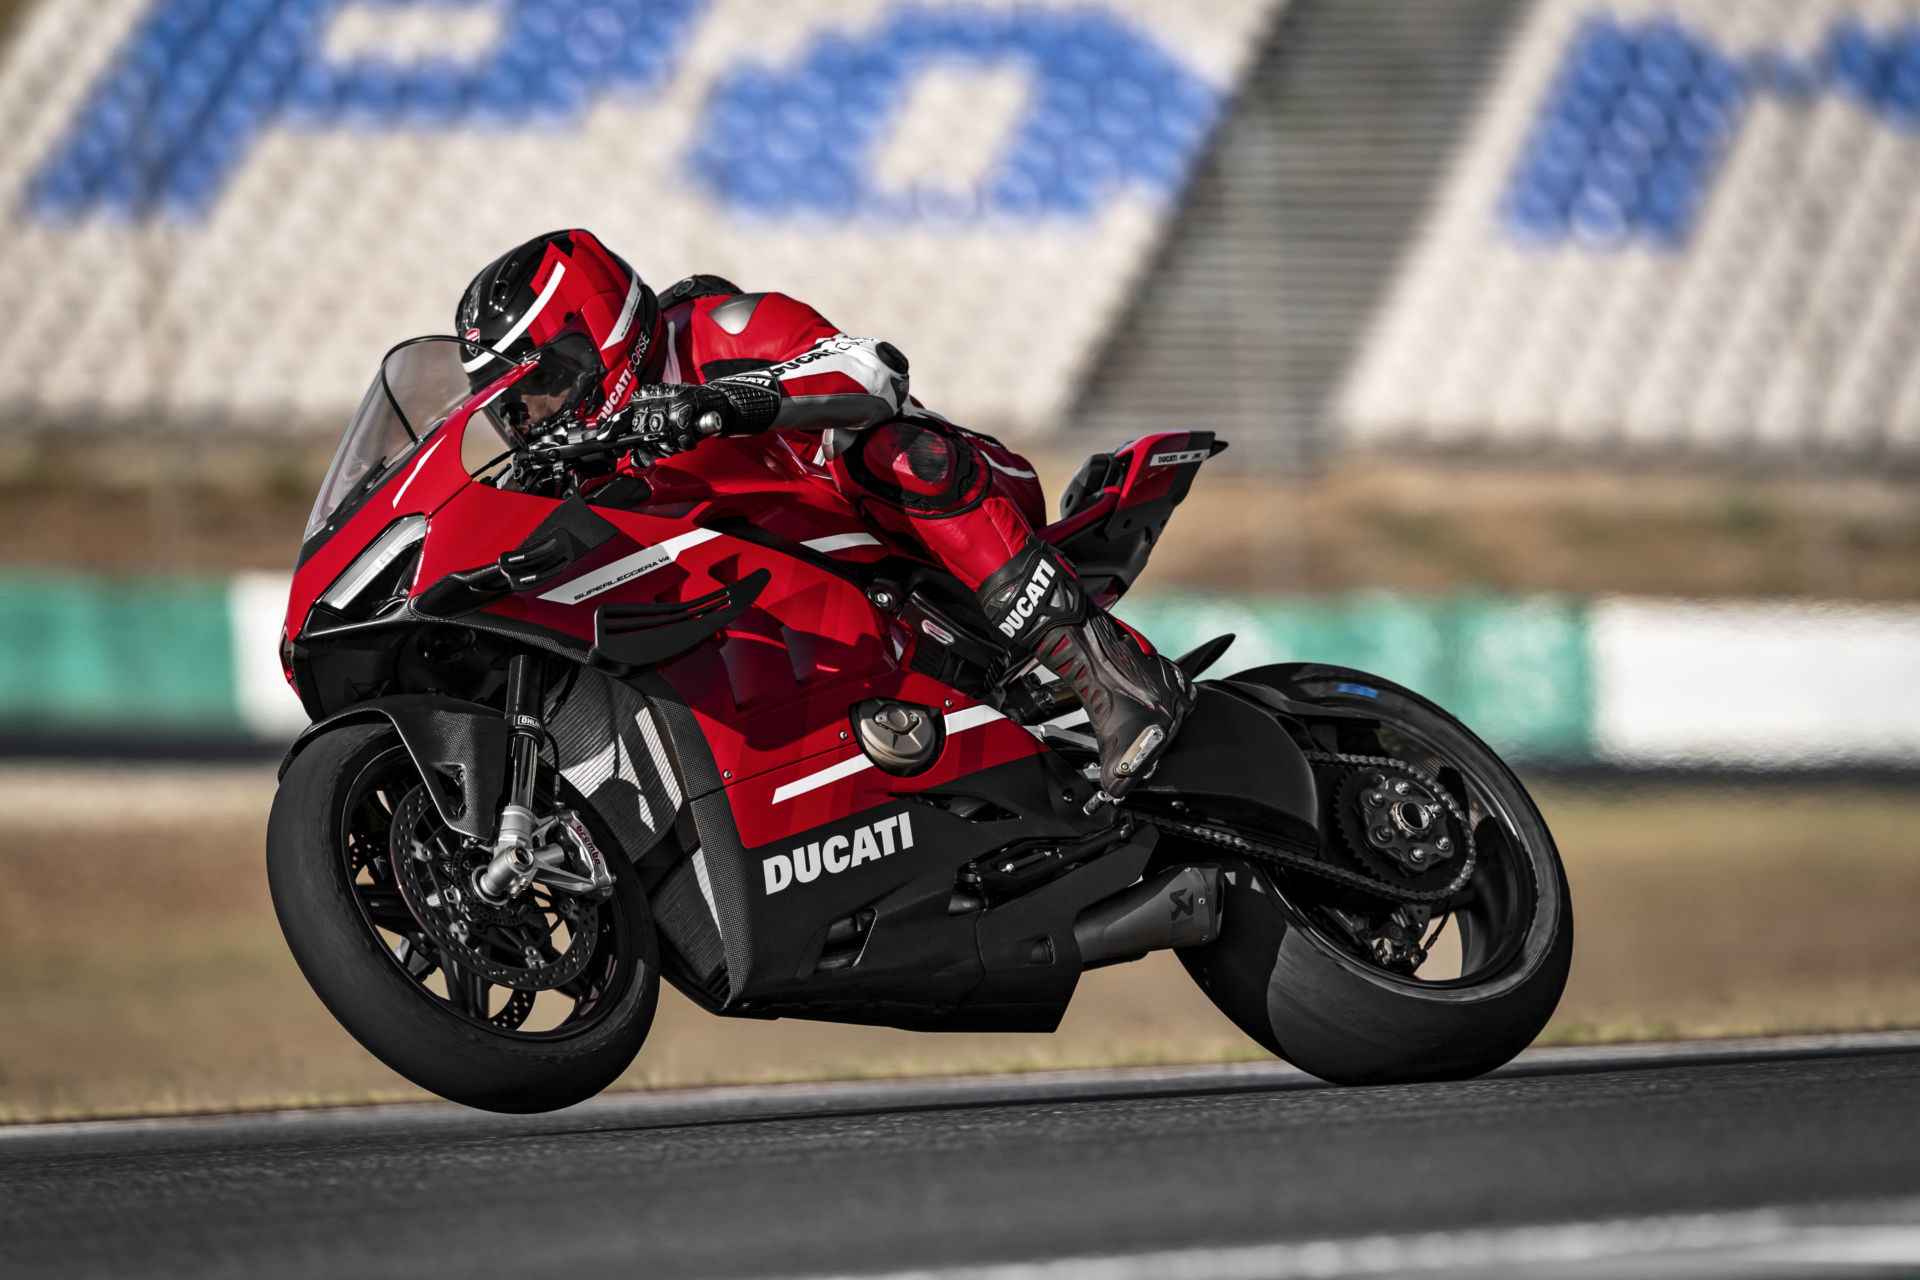 A Ducati Superleggera V4 at speed. Photo courtesy of Ducati.